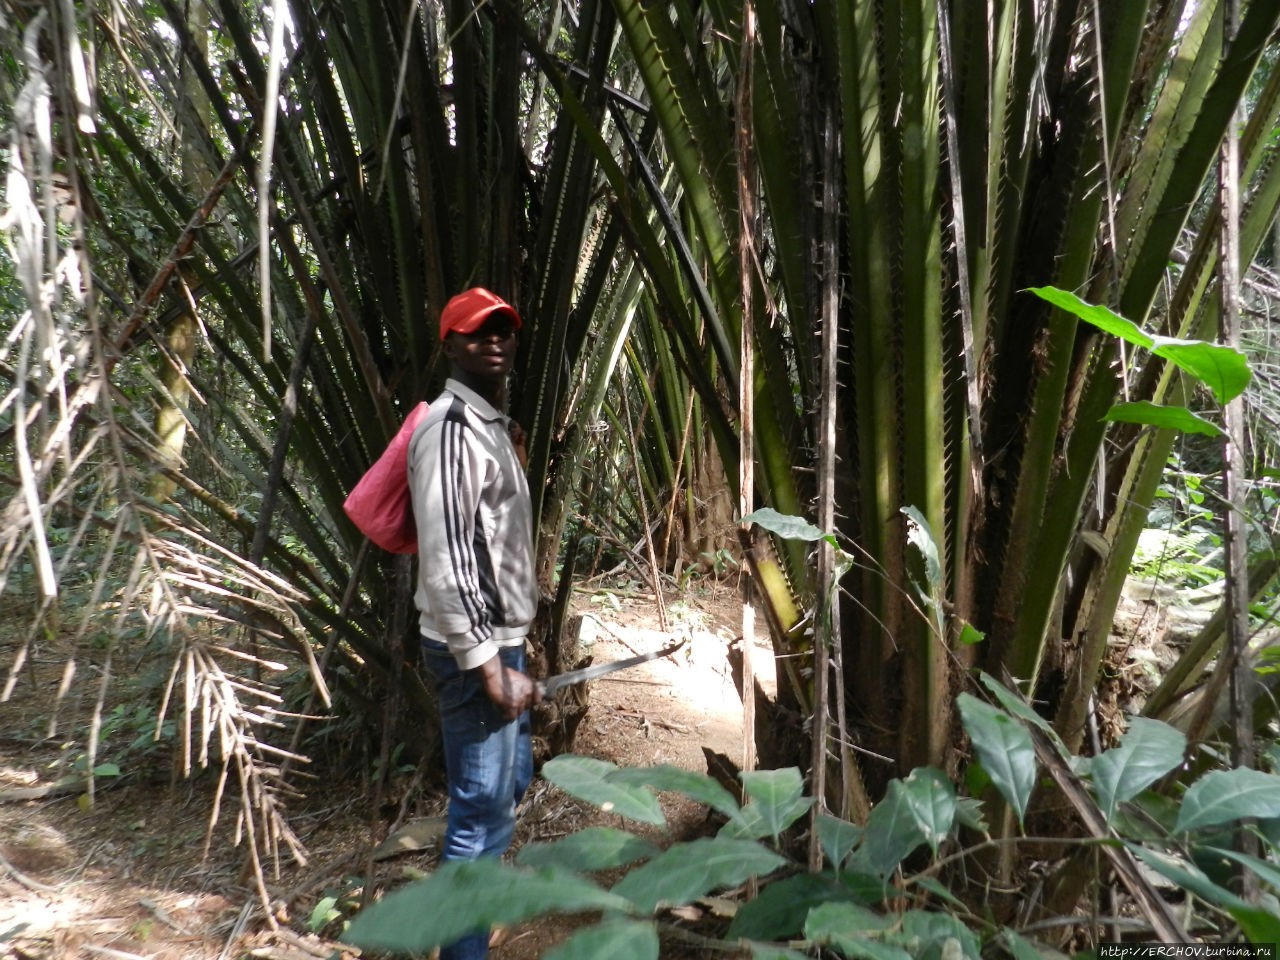 Камерун. Ч — 17. Пигмеи Бака и заповедник Джа Центральный регион, Камерун